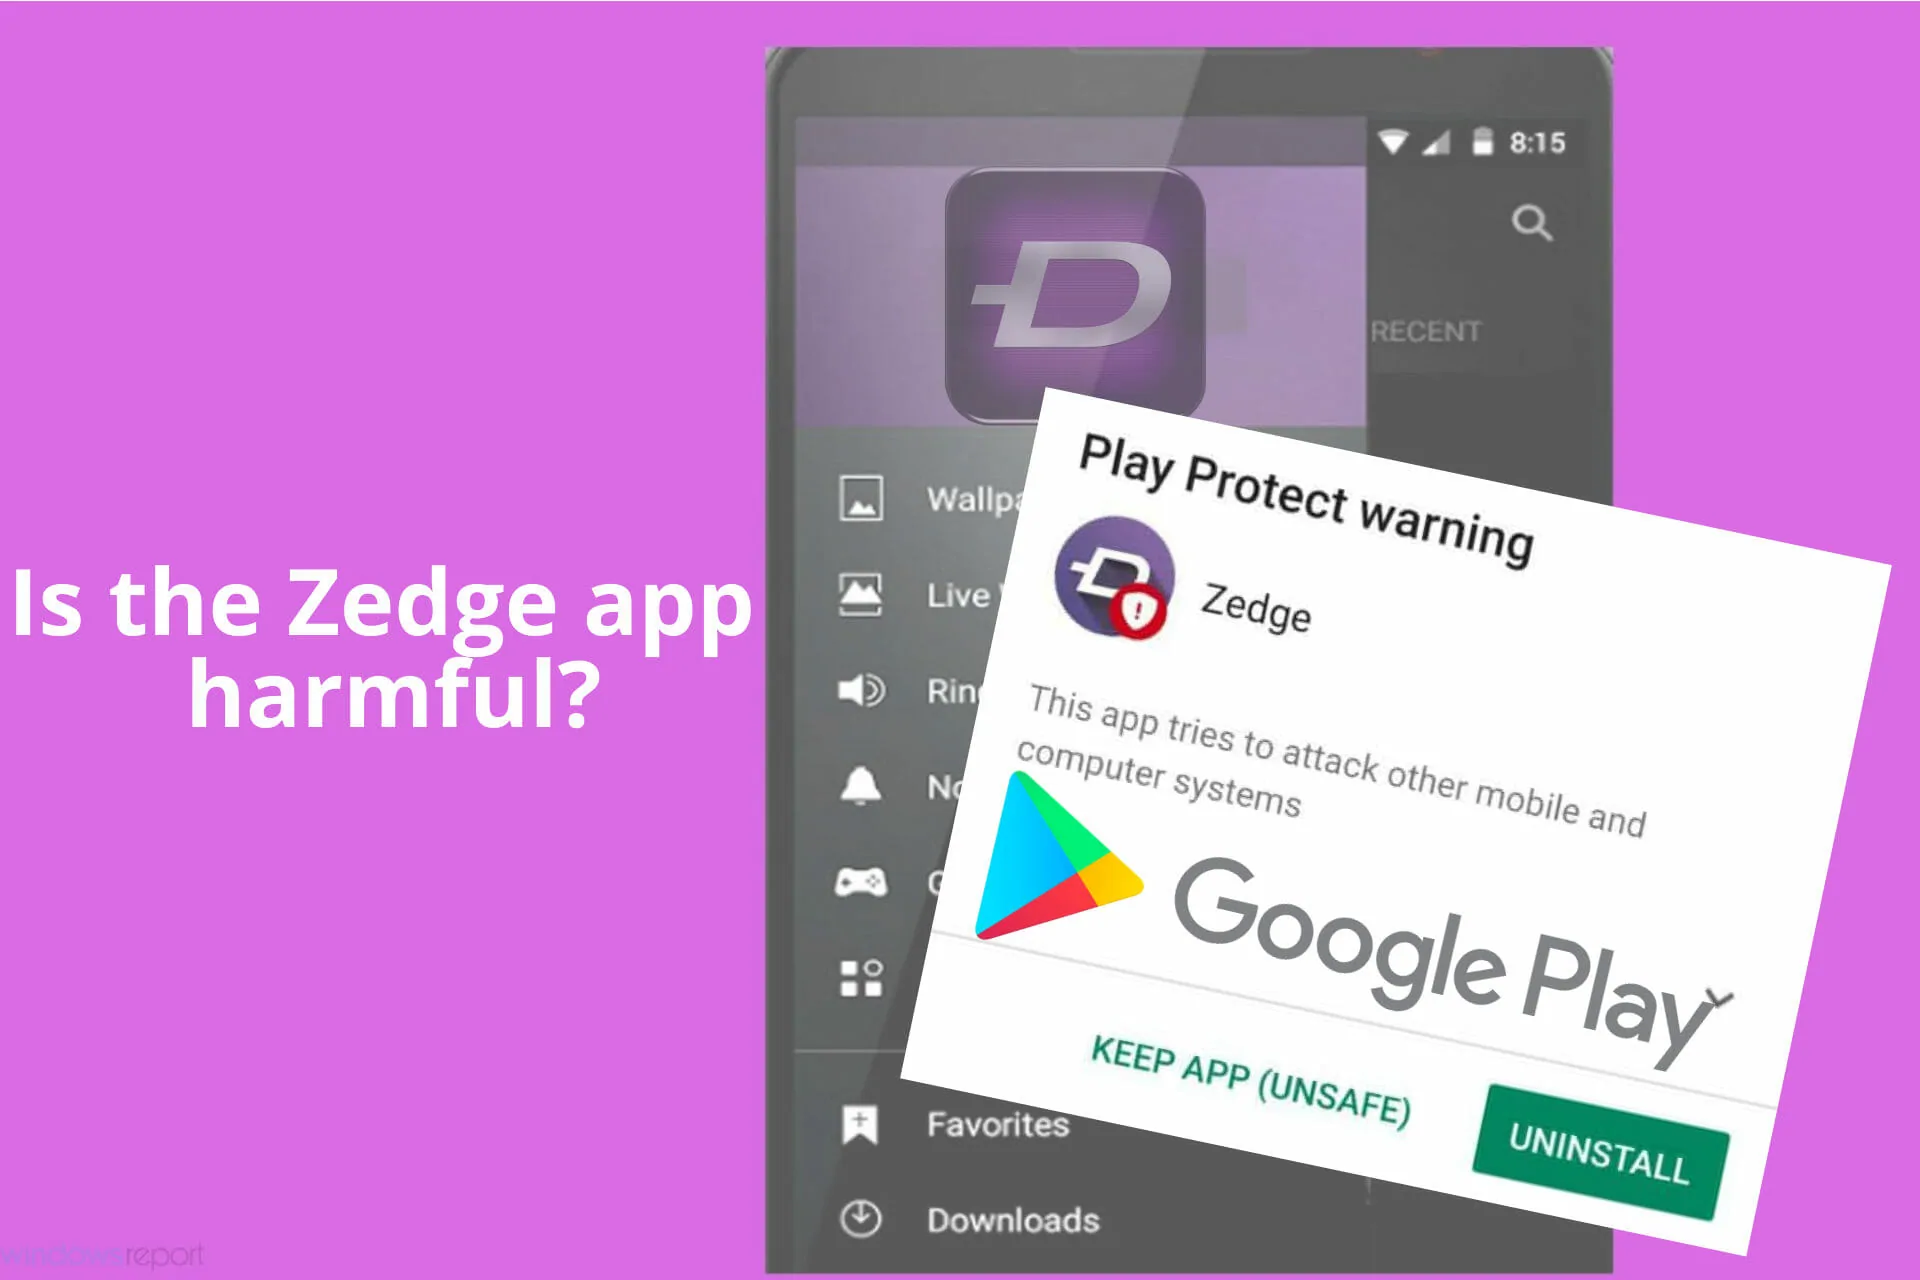 Fix Zedge App May Be Harmful Google Play Notification